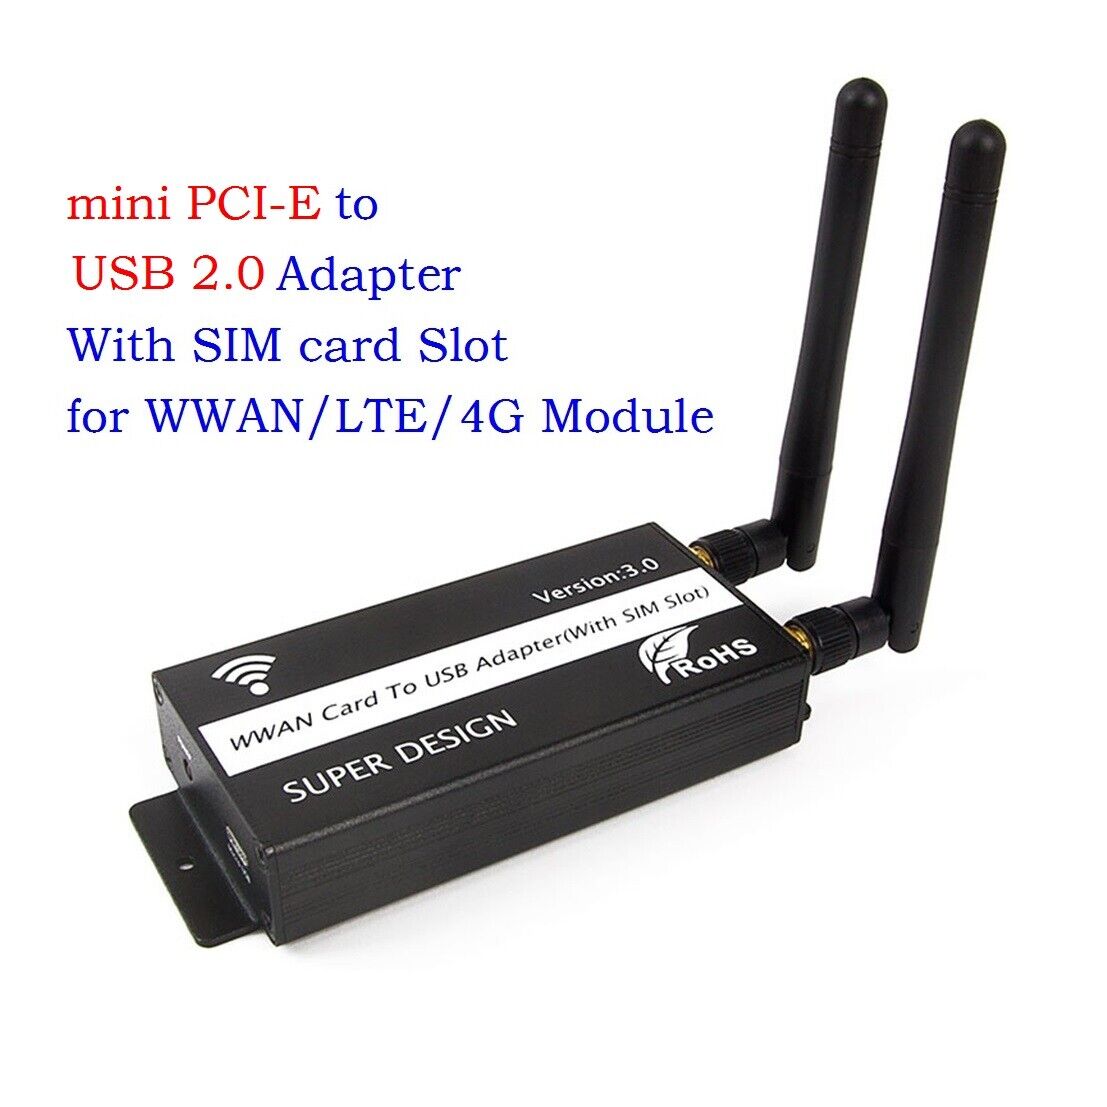 Mini PCI-E PCI-Express to USB Adapter with SIM Card Slot for WWAN/LTE/4G Module